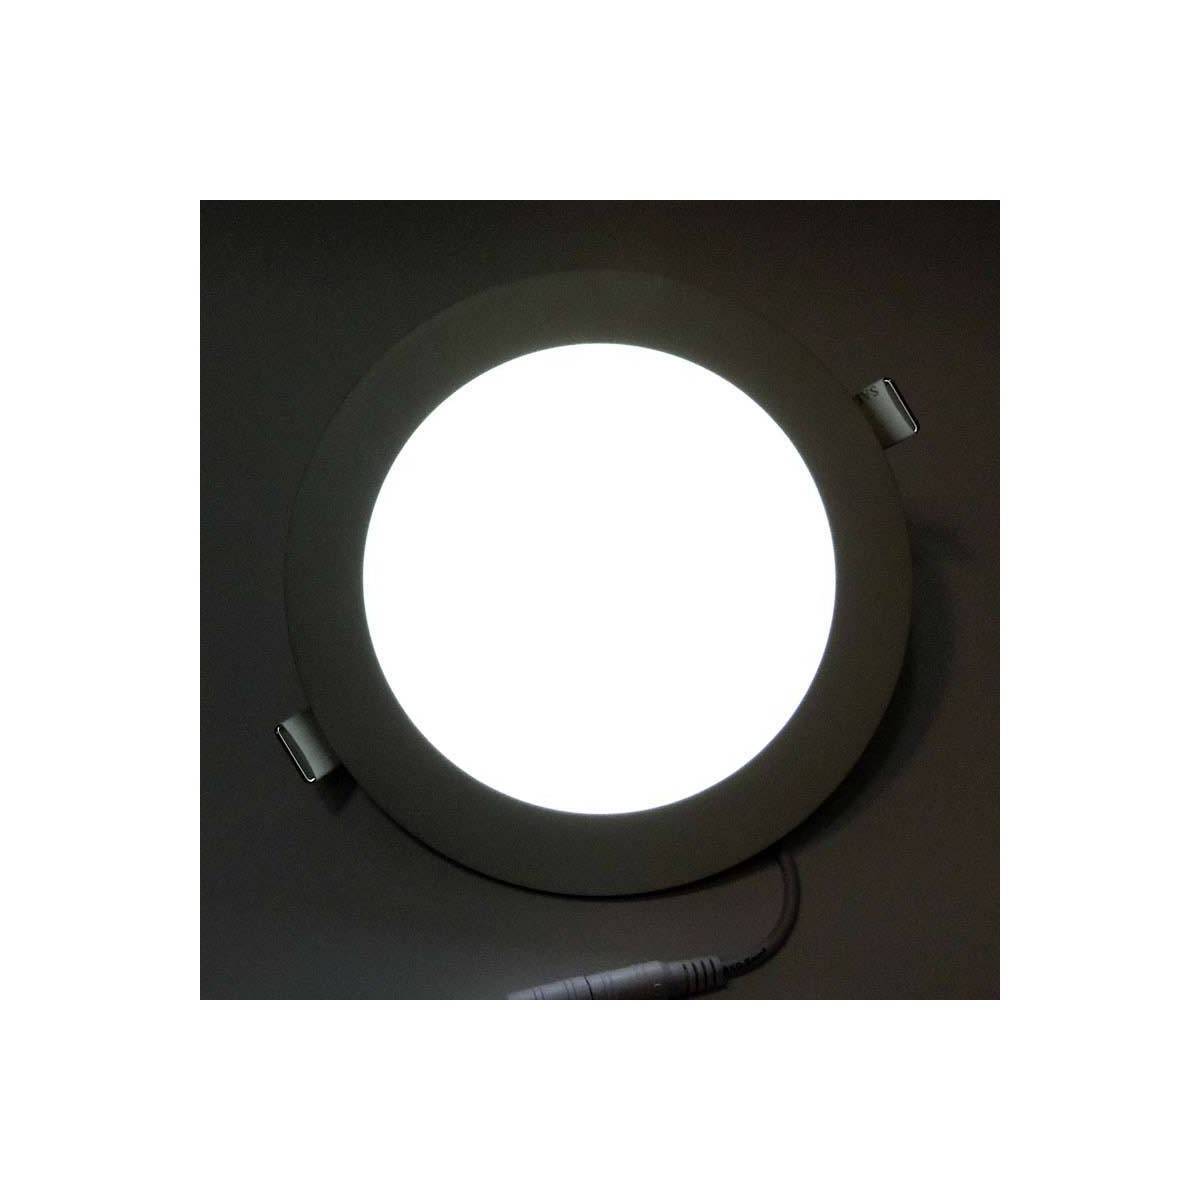 Downlight LED extraplano circular 12W